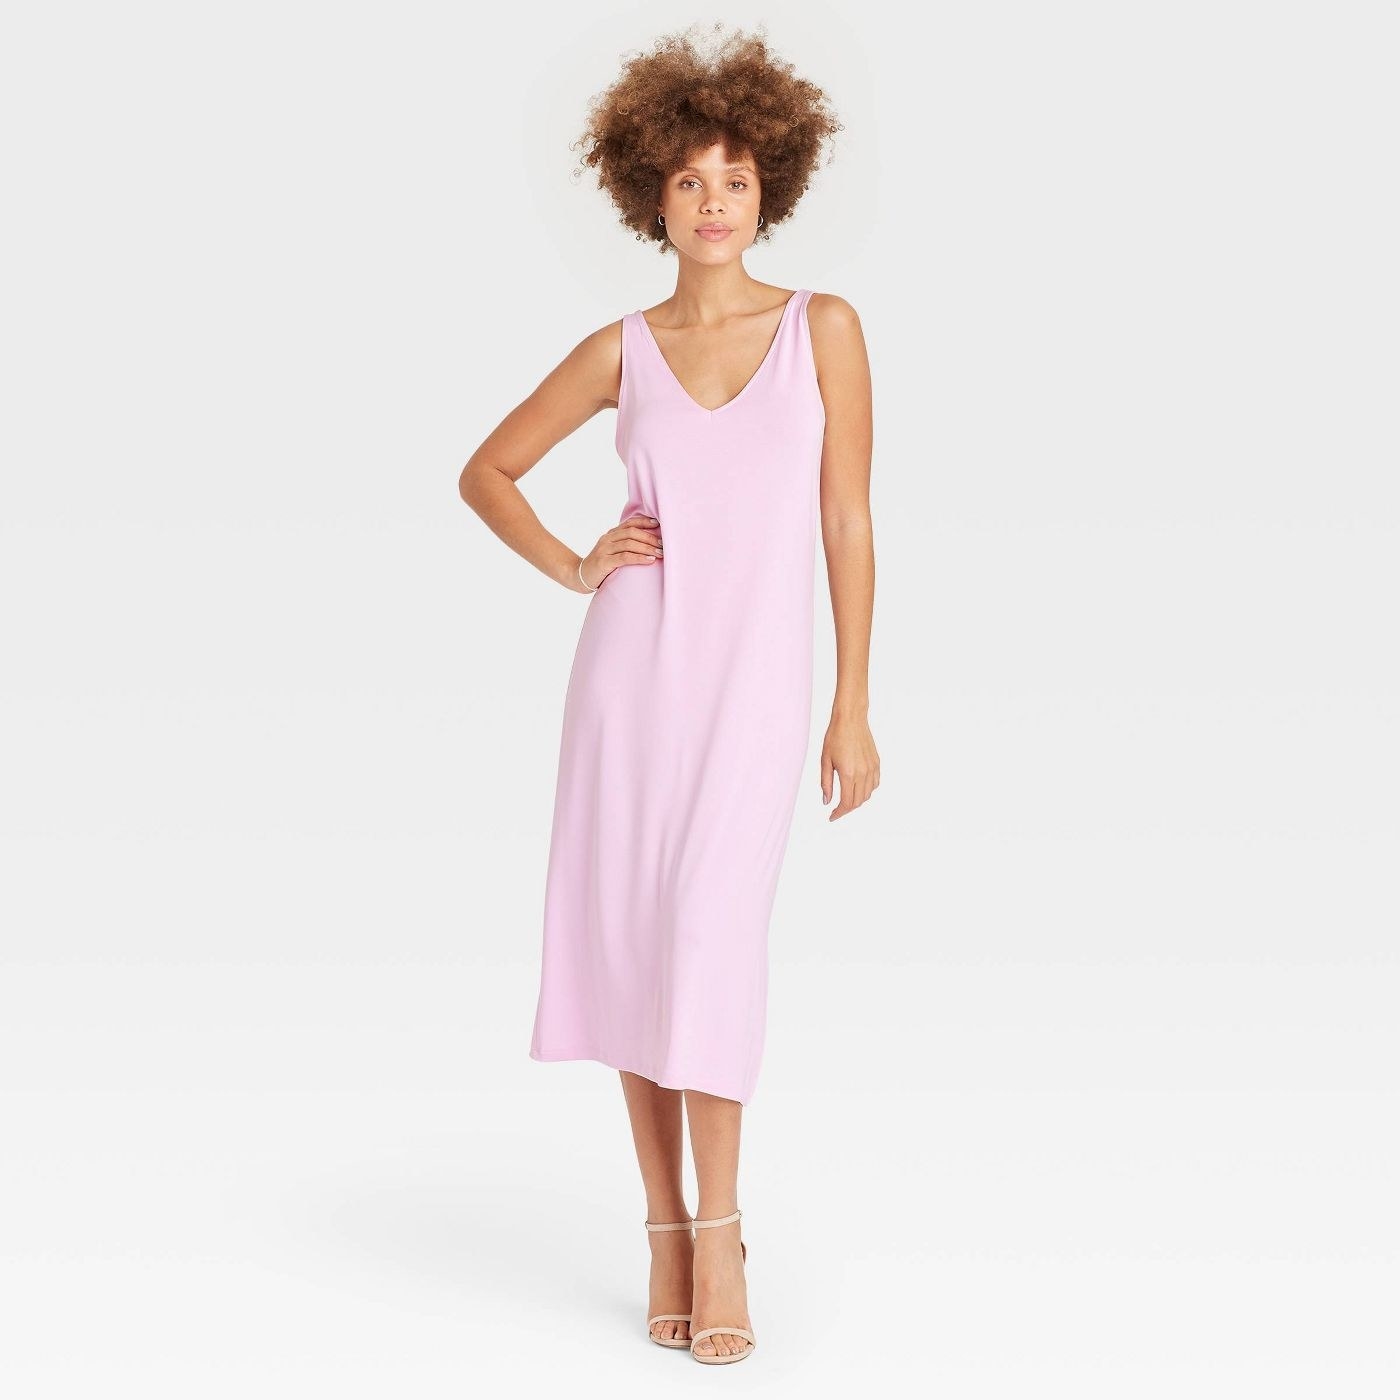 A model wearing a light pink sleeveless knit dress